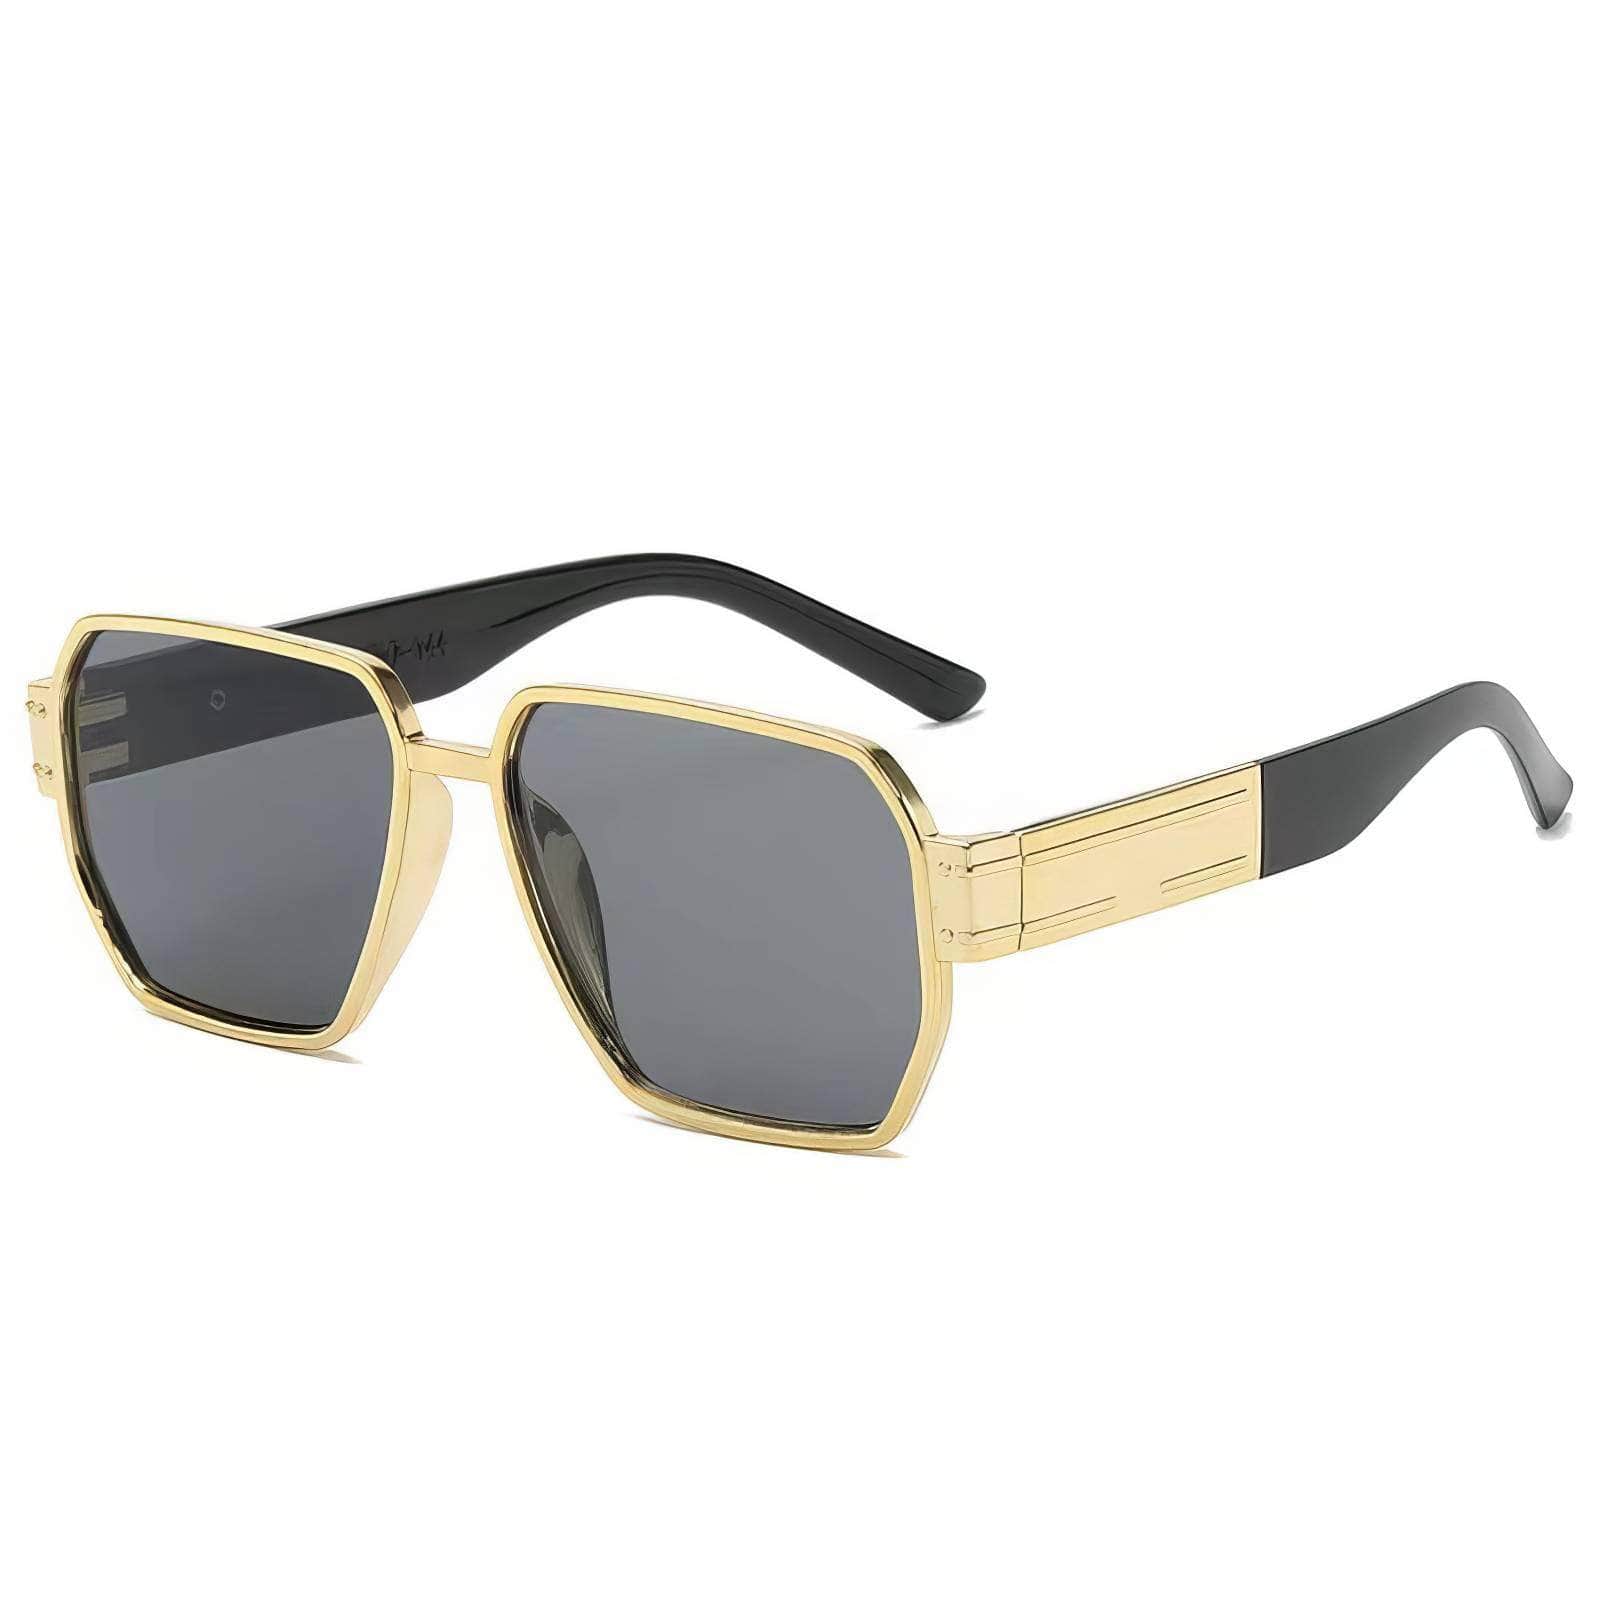 Simple Square Oversized Sunglasses Black/Gold / Resin